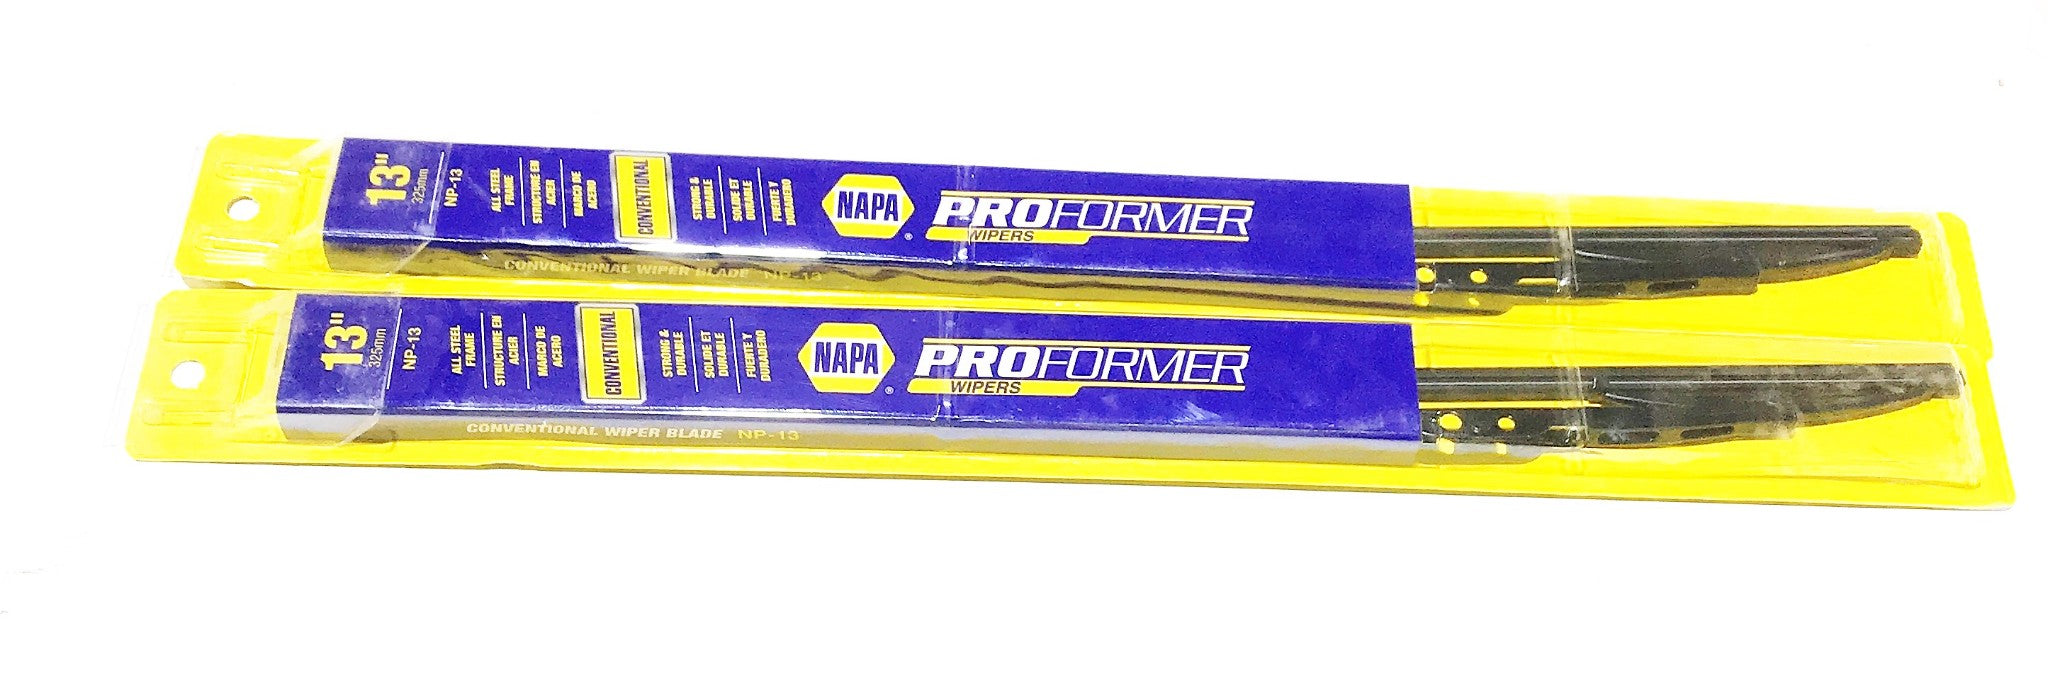 NAPA "ProFormer" Windshield Wiper Blade NP-13 [Lot of 2] NOS